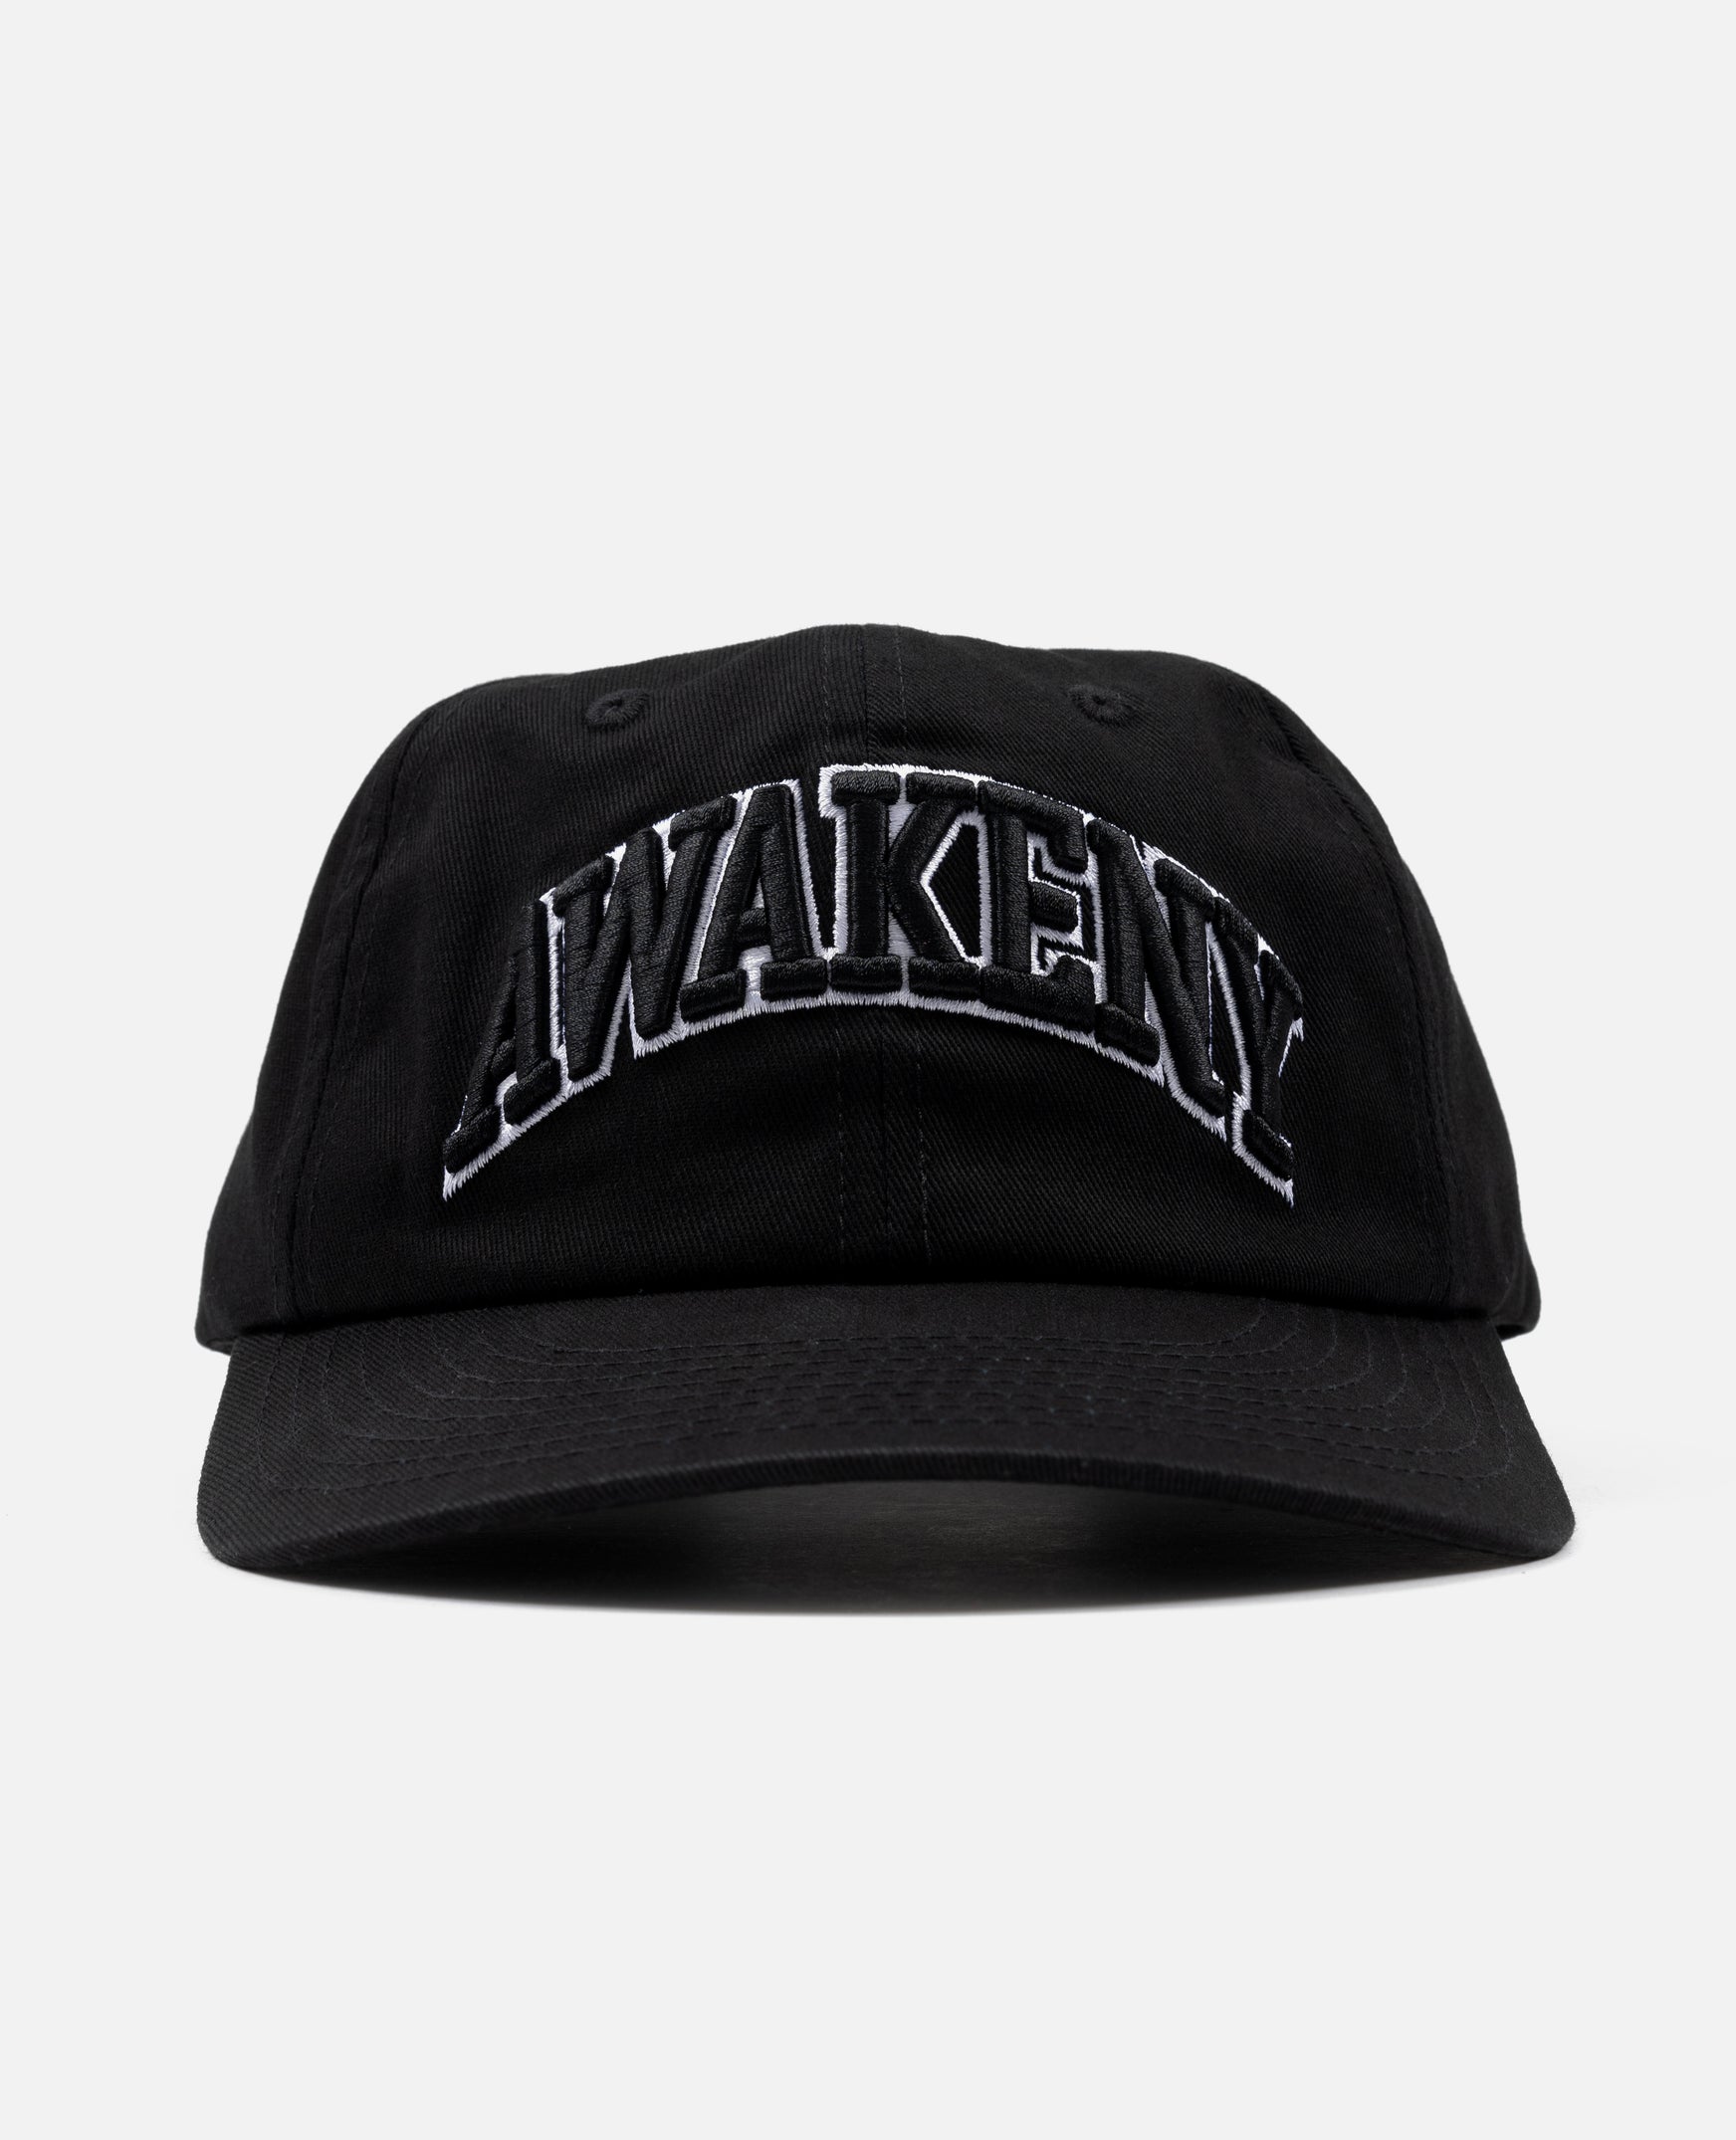 Awake NY 6 Panel Dad Hat (Black)